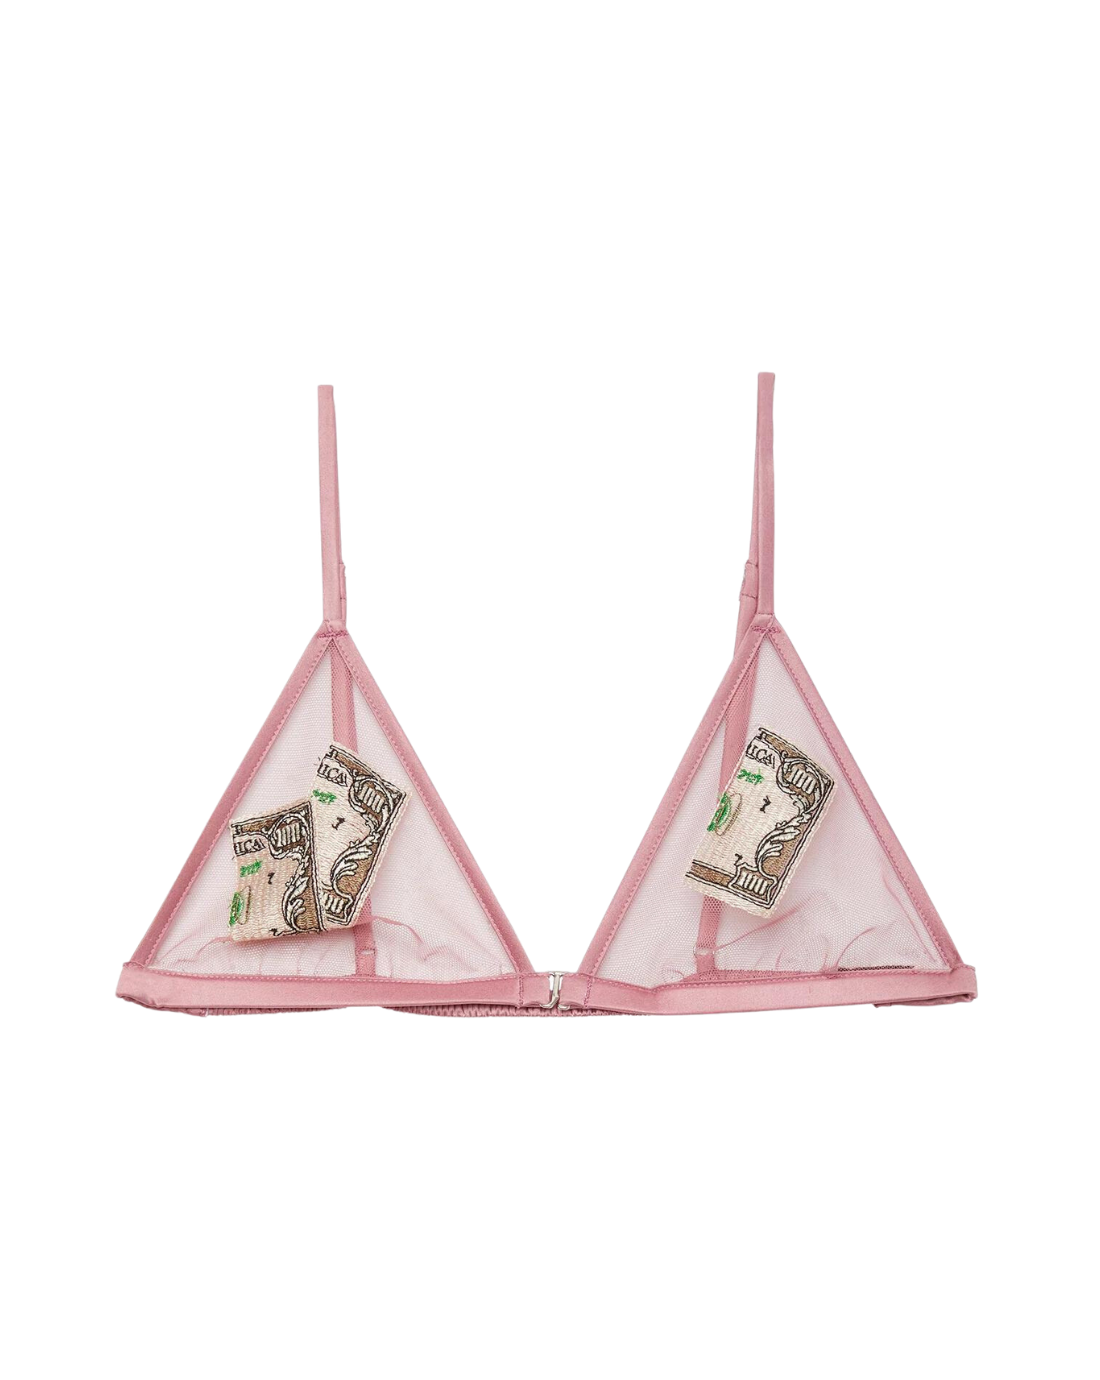 Victoria's Secret PINK Bling Triangle Bra 